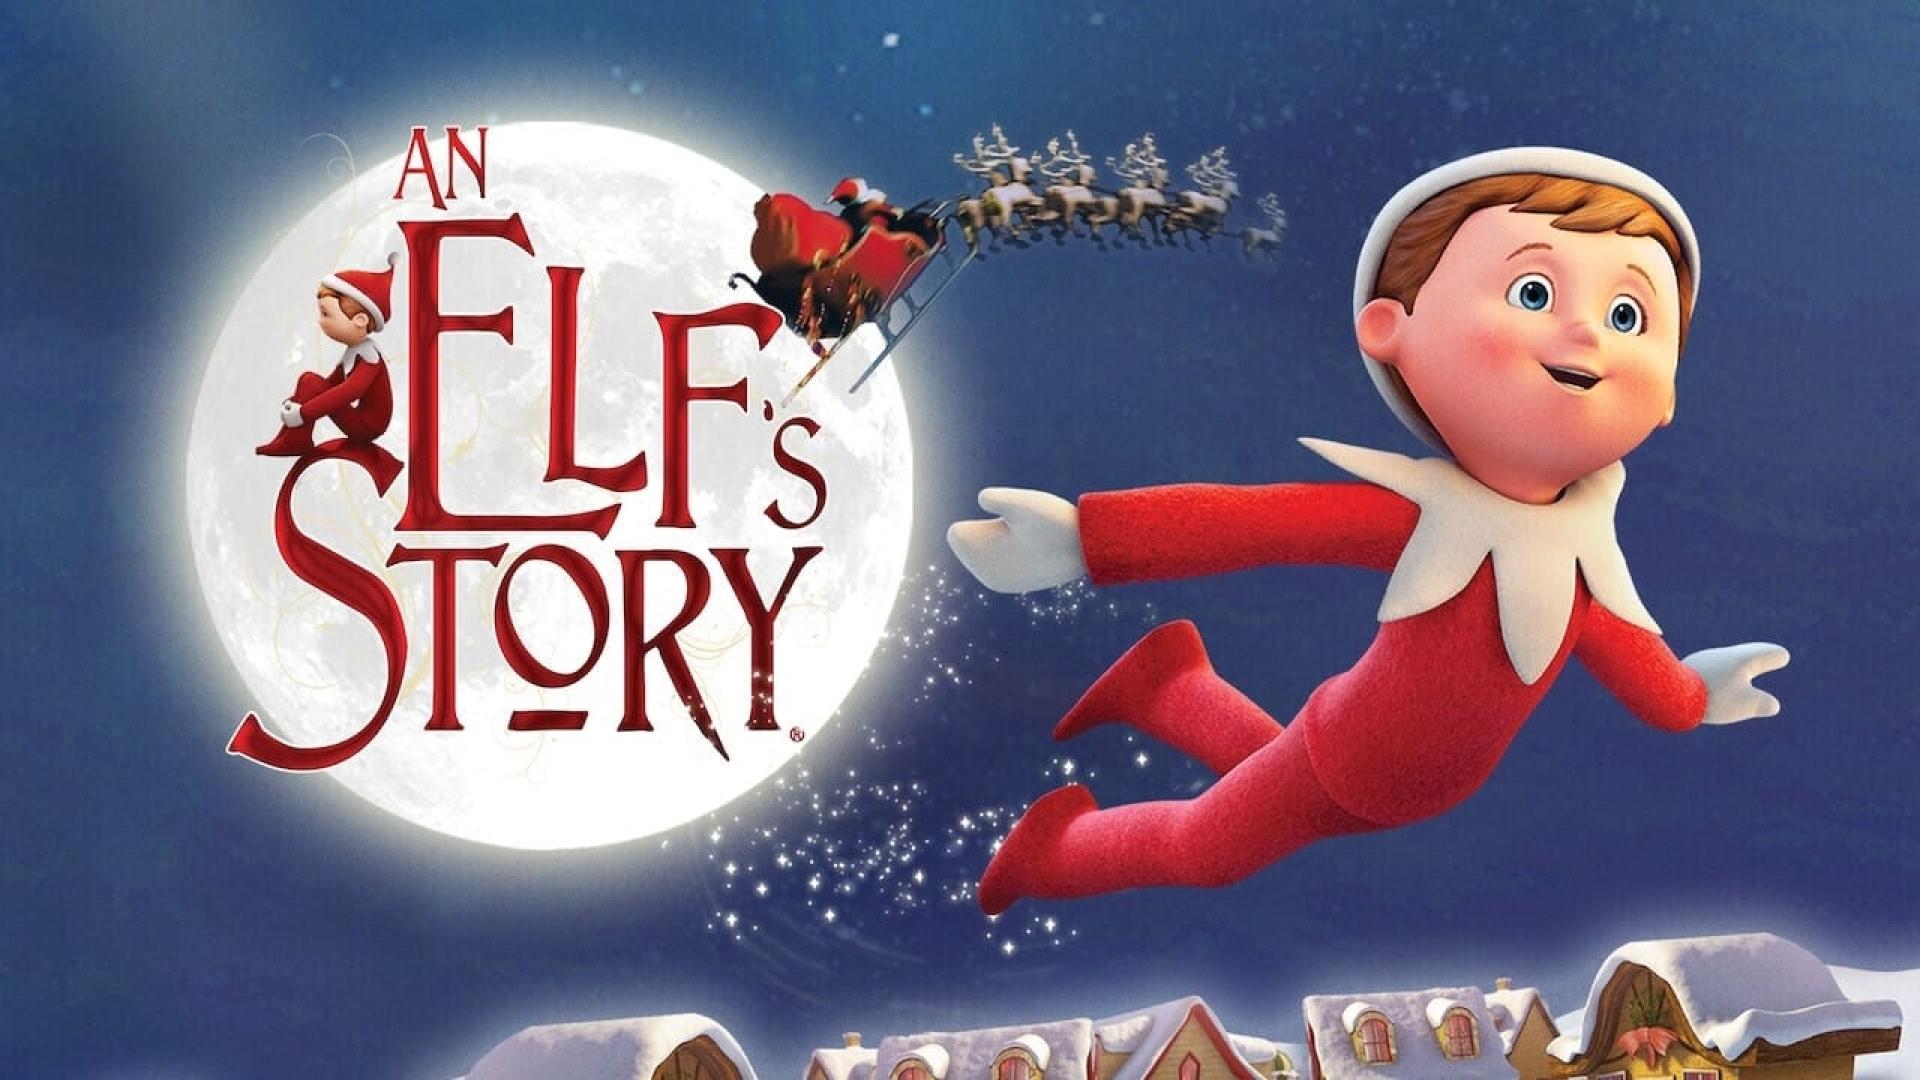 دانلود انیمیشن An Elf’s Story: The Elf on the Shelf 2010